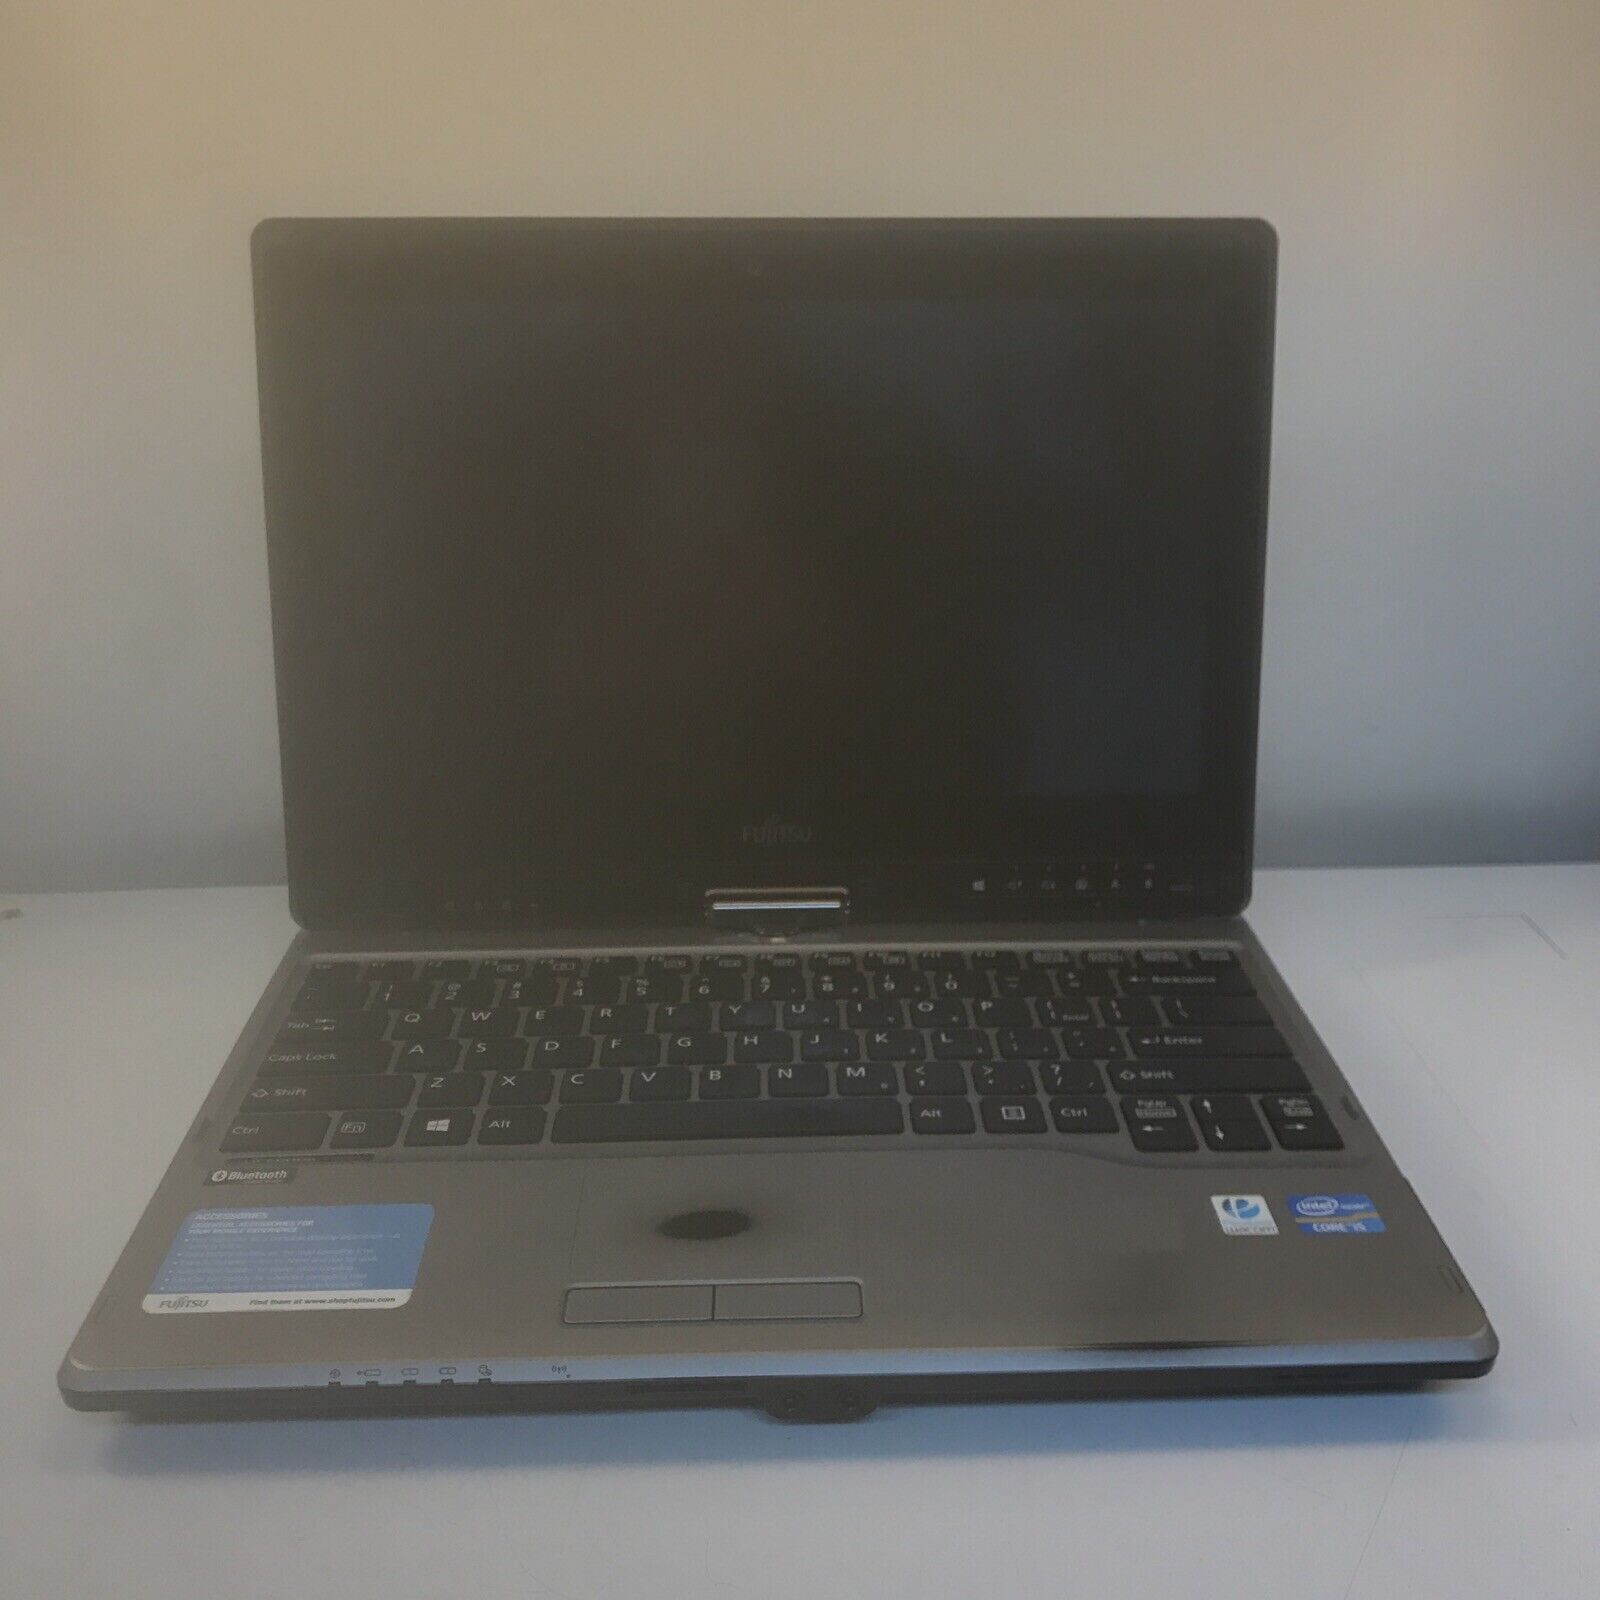 Fujitsu Lifebook T732 Laptop i5-3210m 2.5Ghz 4GB RAM No HDD/Battery Boot to BIOS